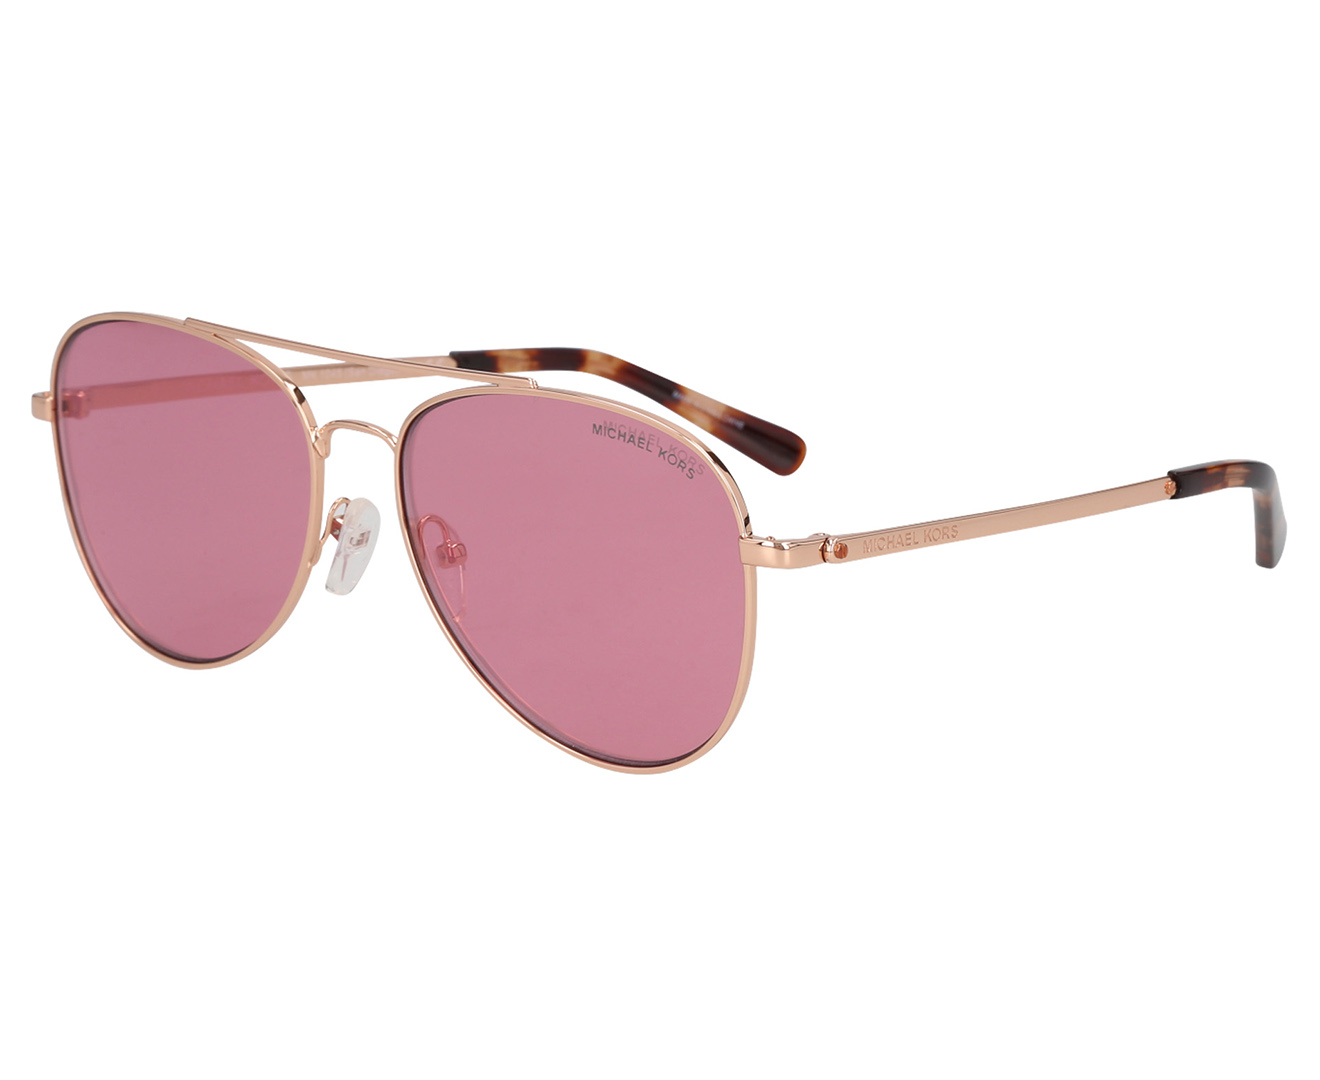 Michael Kors Women S San Diego Sunglasses Rose Gold Pink Au